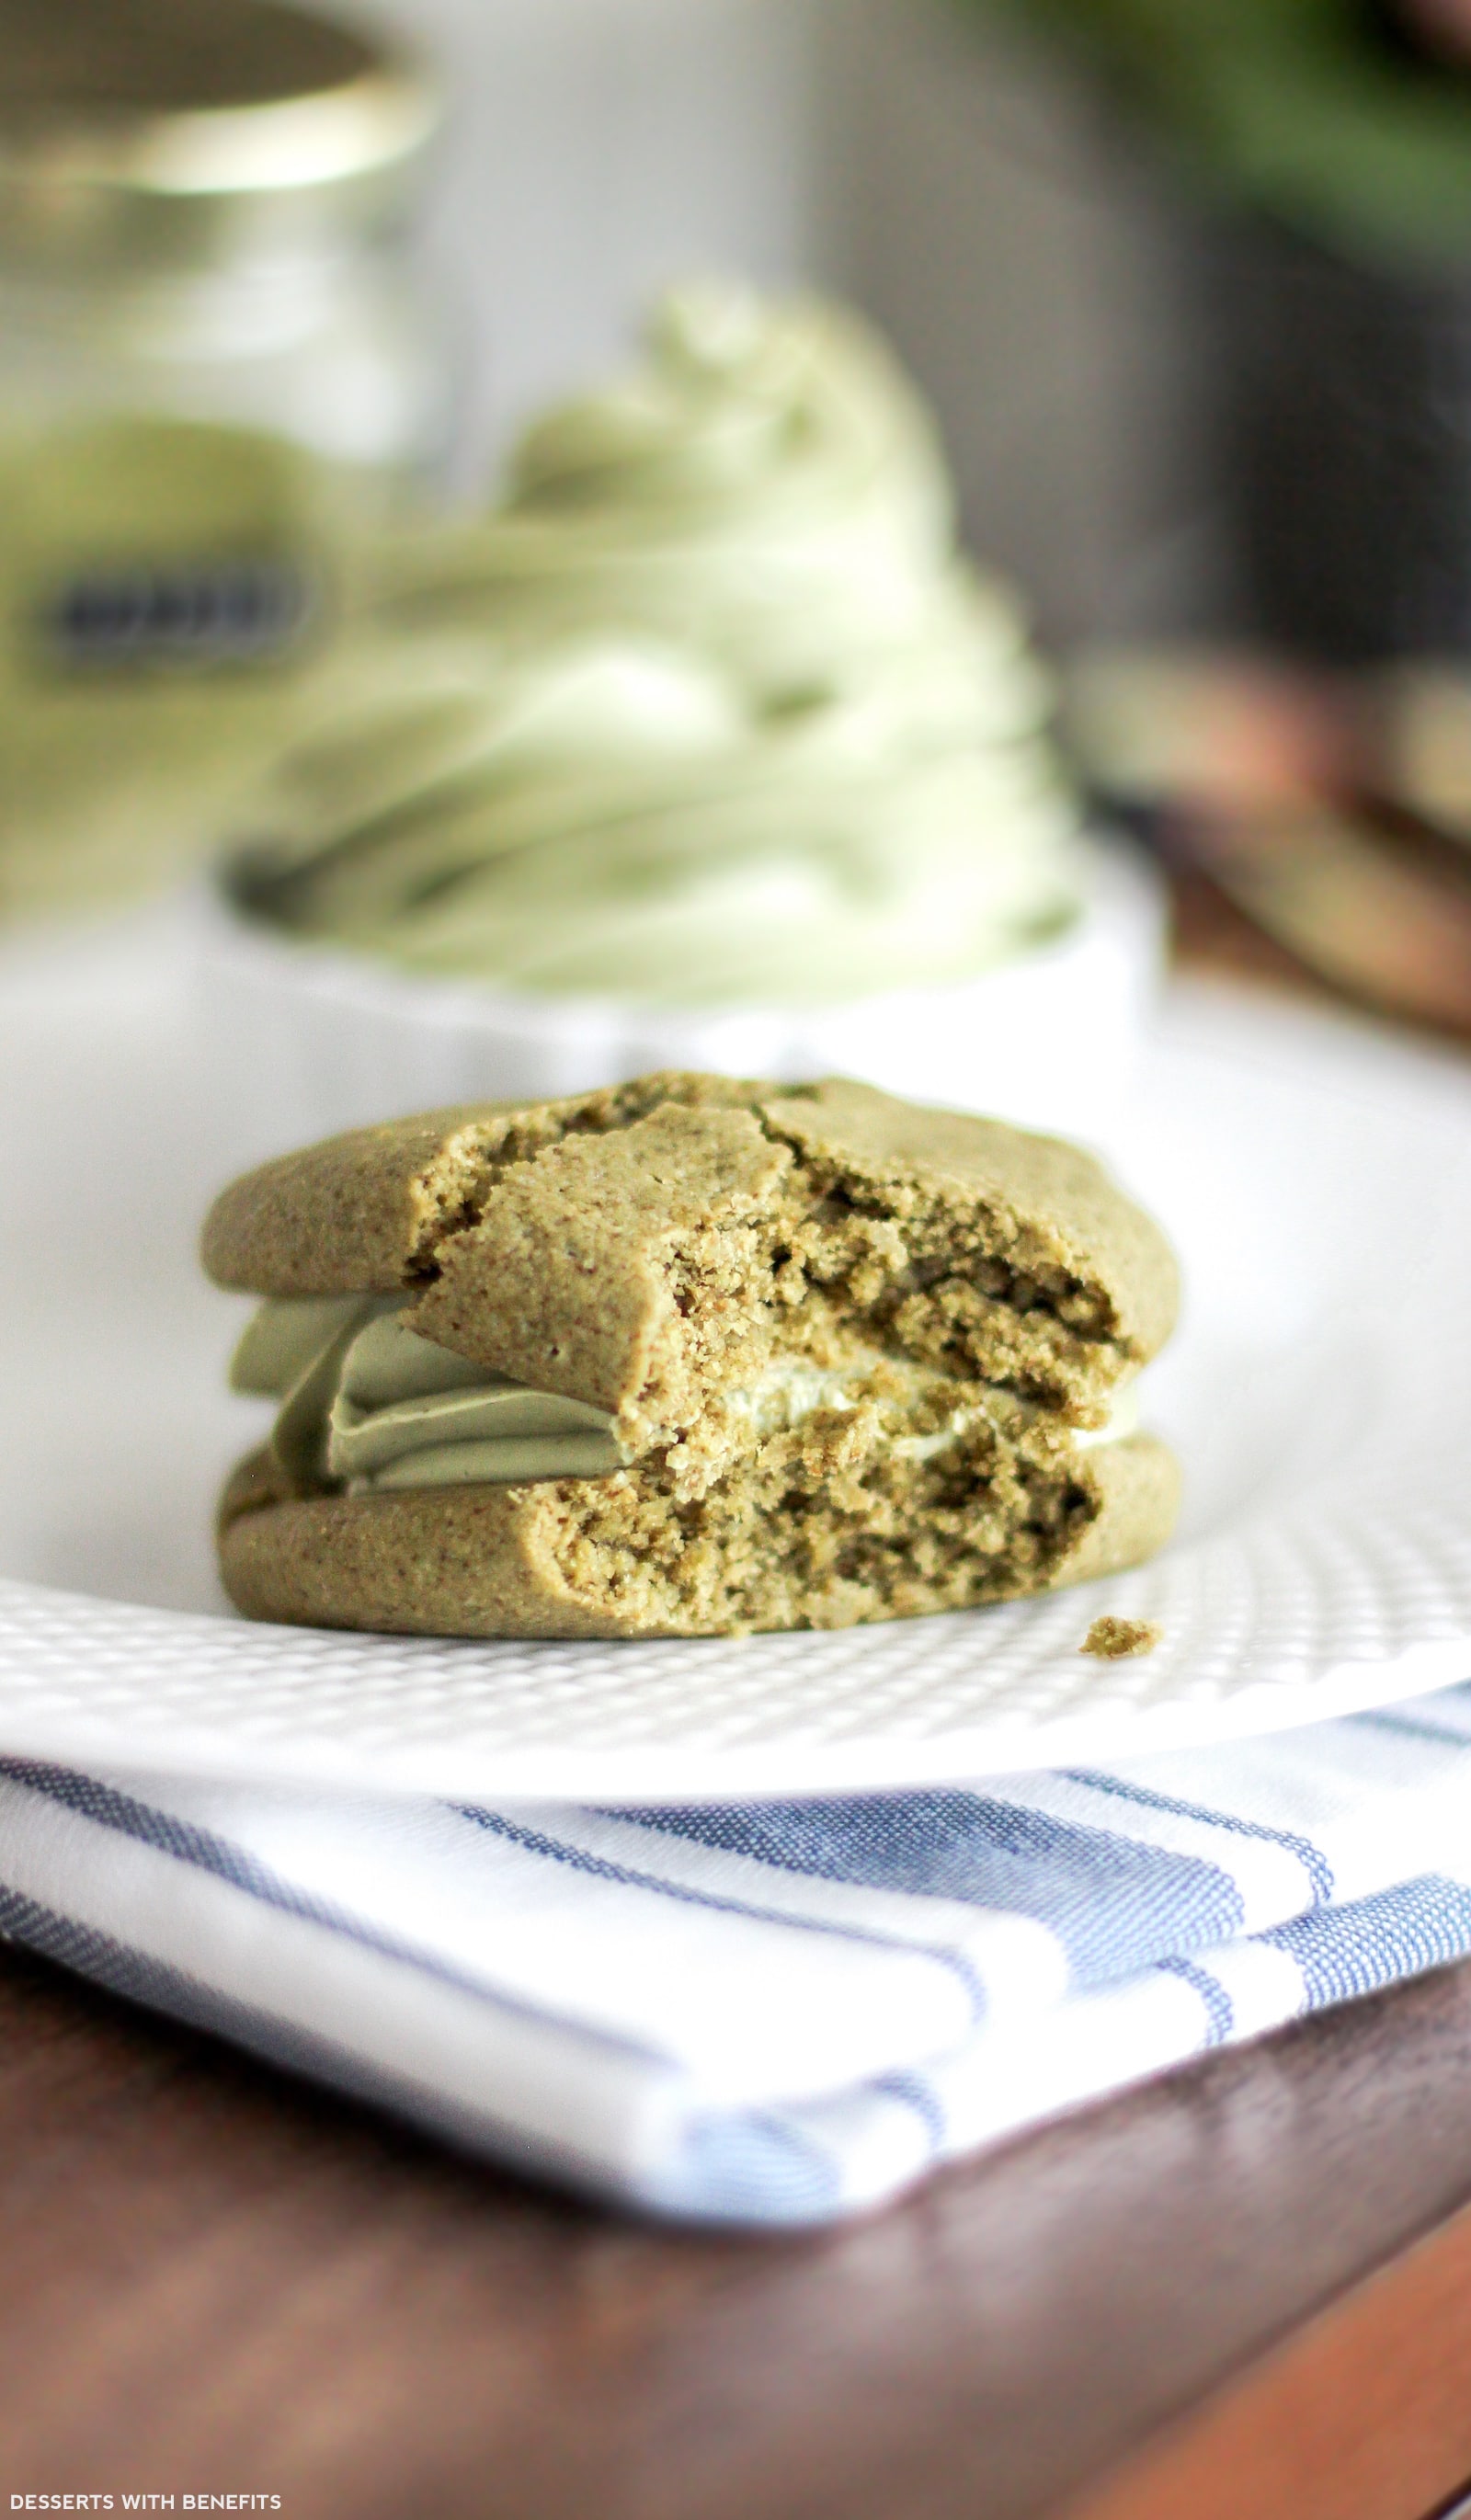 Healthy Matcha Green Tea Sugar Cookies (refined sugar free, gluten free, dairy free, vegan) - Healthy Dessert Recipes at Desserts with Benefits